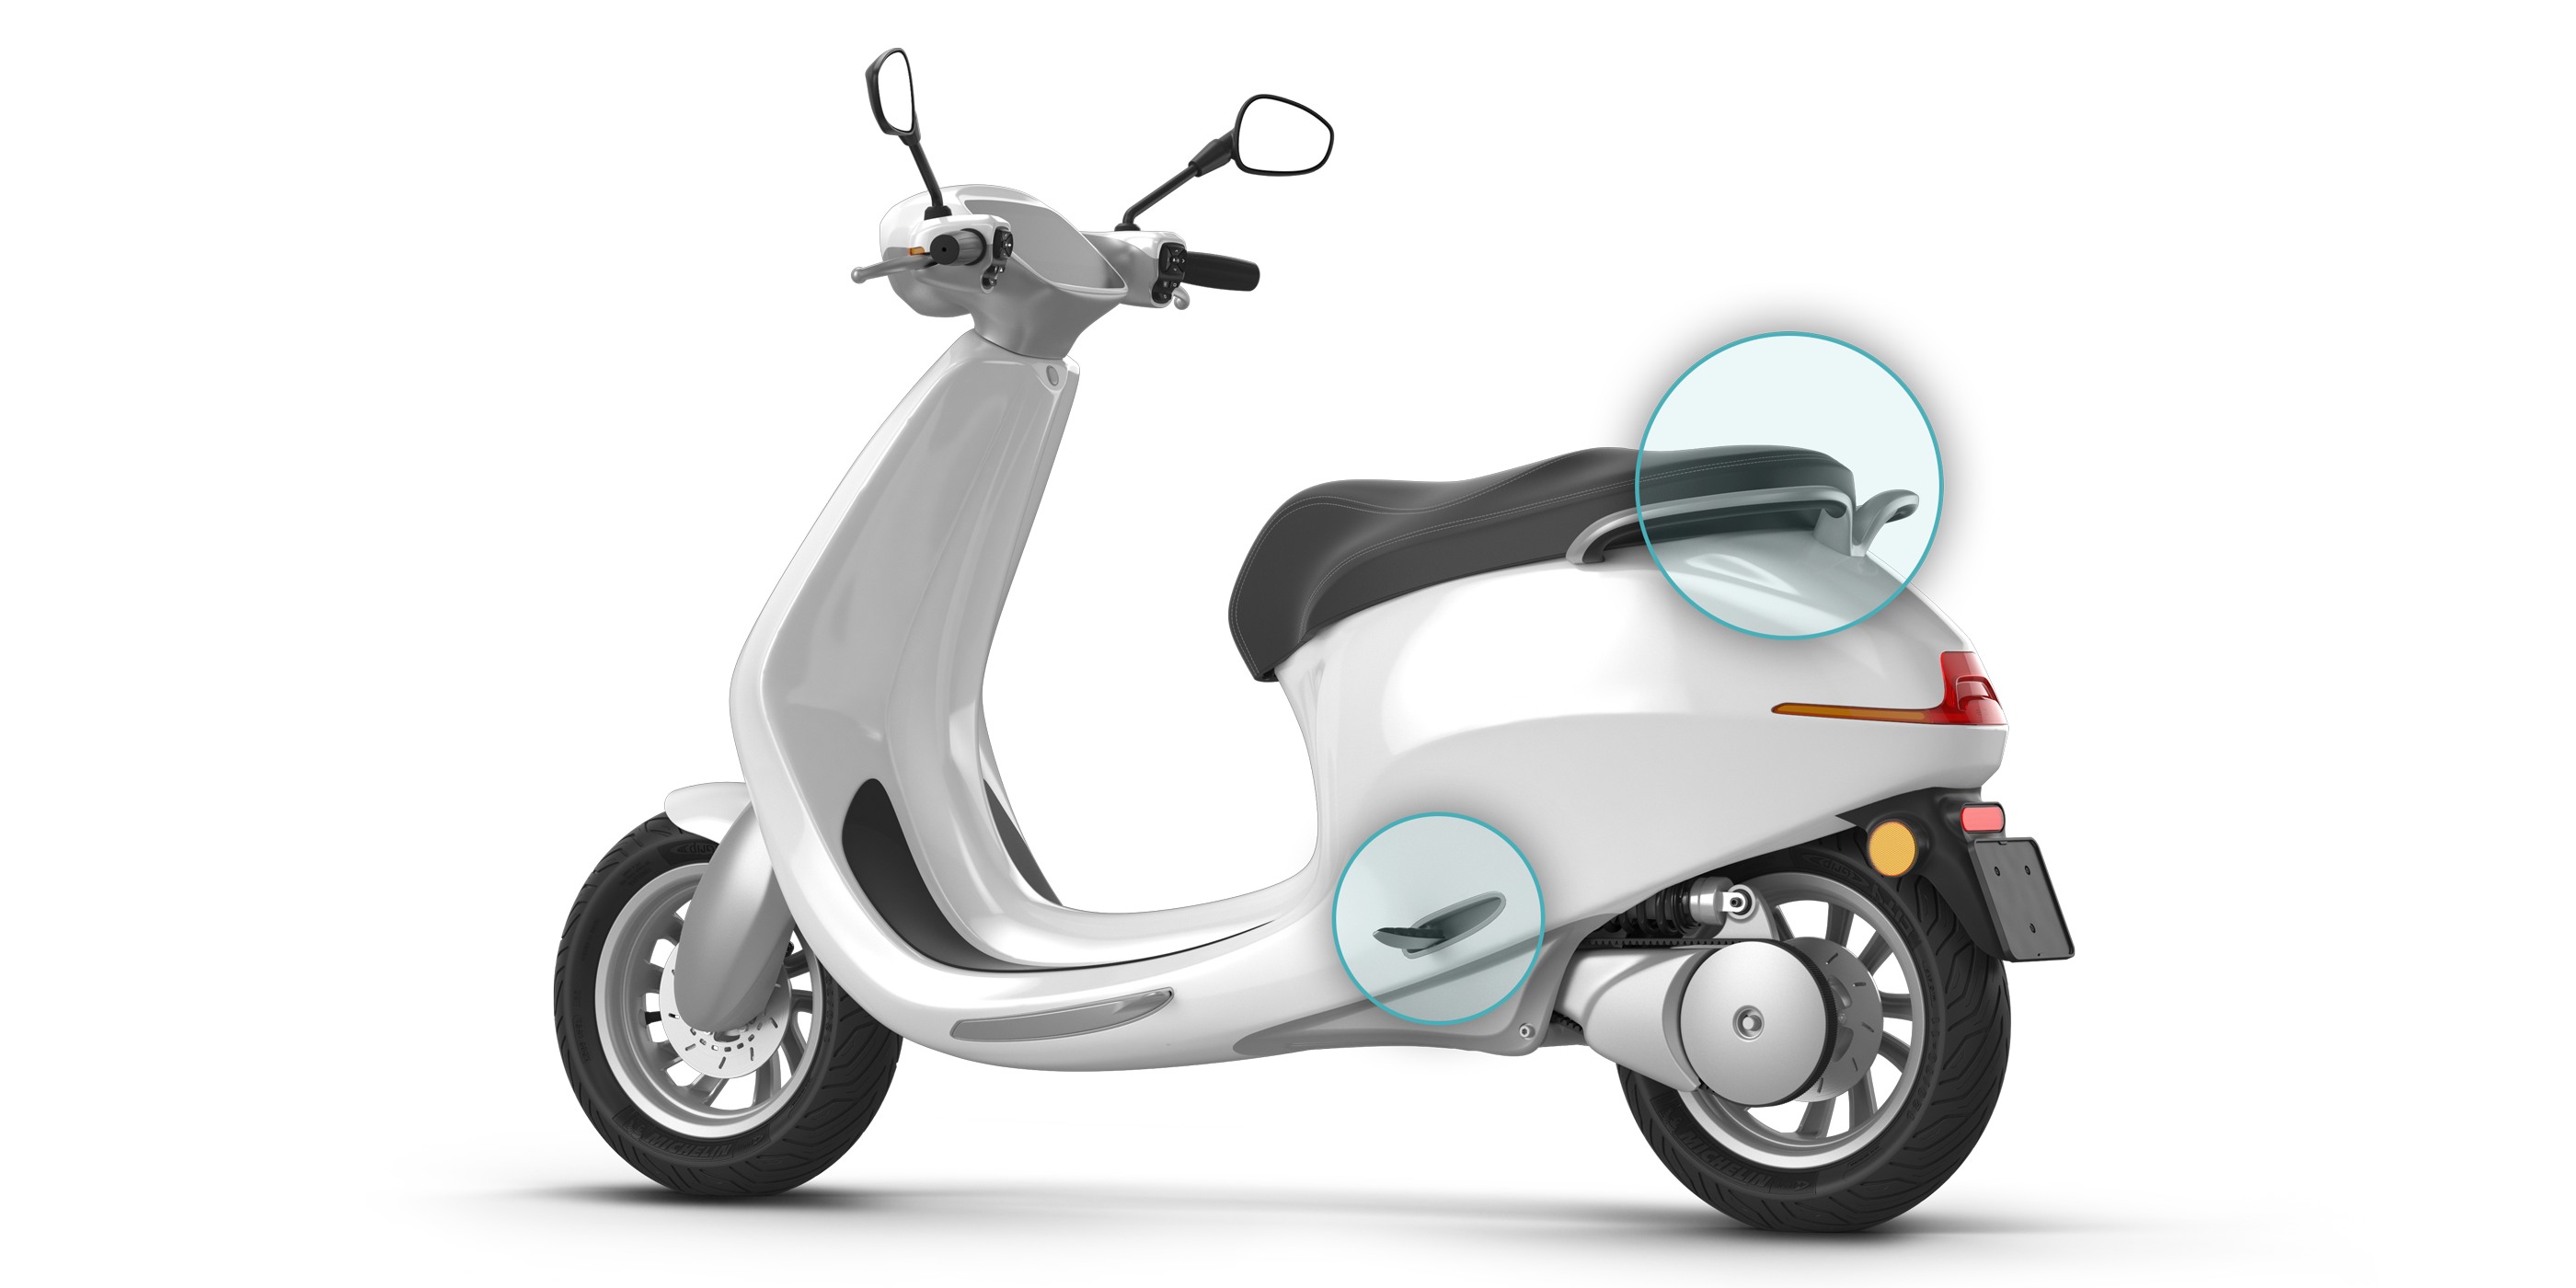 New Dutch-built scooter claims 400 km range with batteries | Electrek